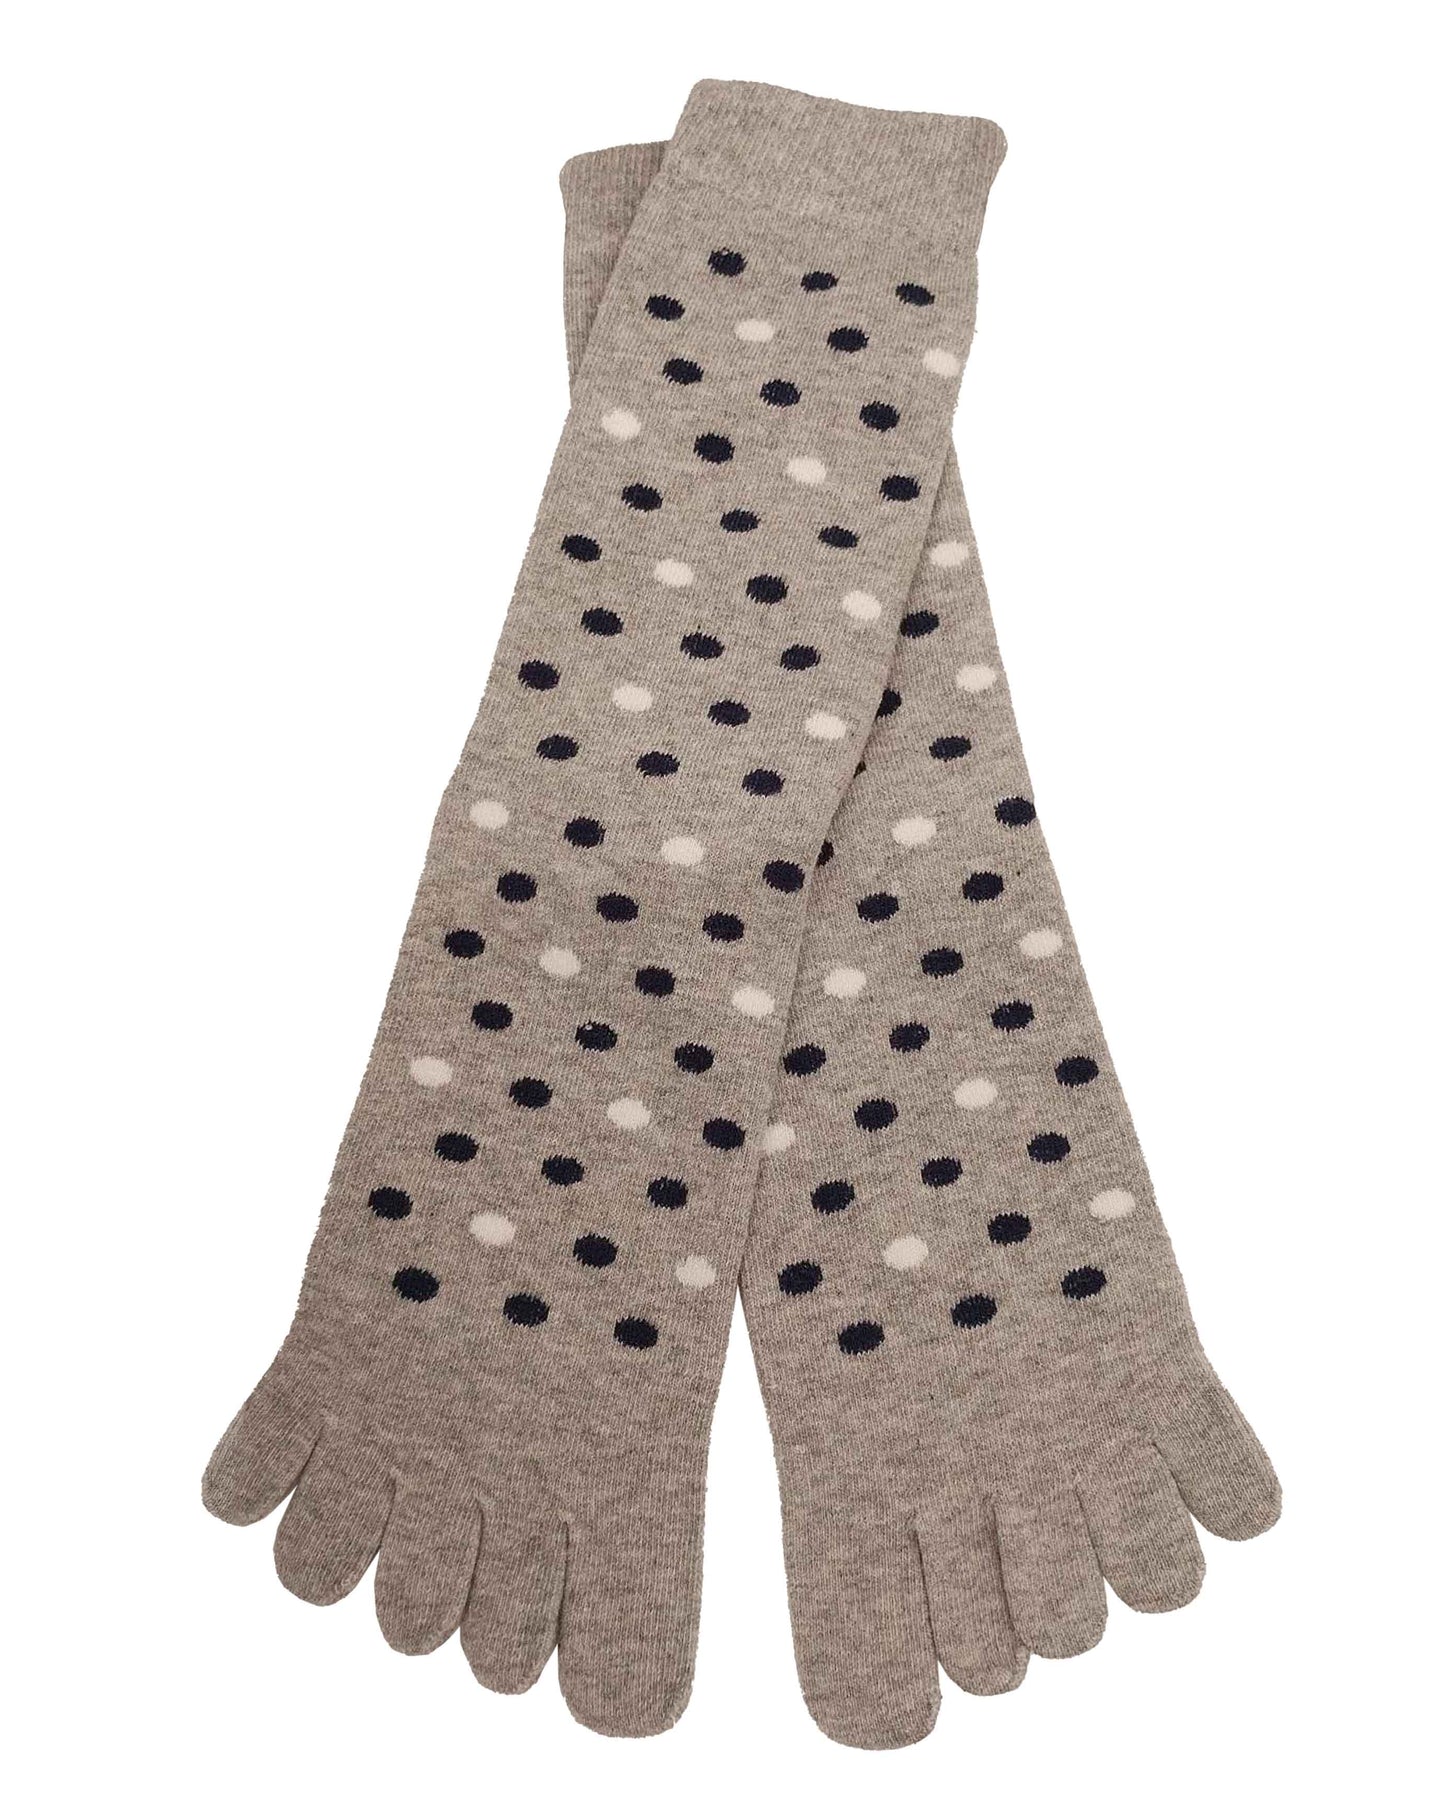 Bonnie Doon Dots Toe Socks - Light grey cotton toe socks with a navy and white polka dot pattern.